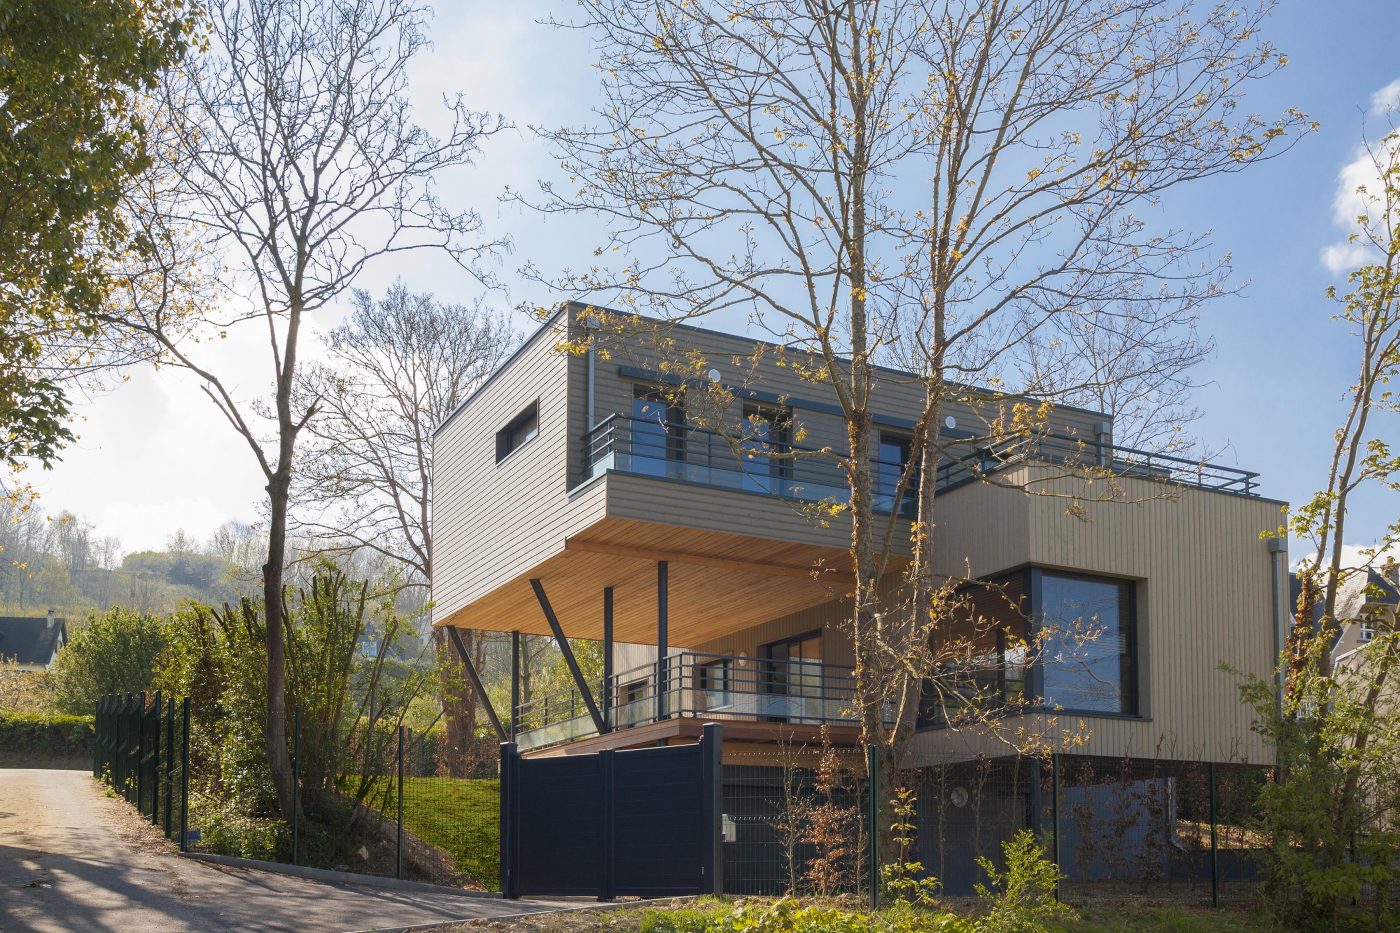 Philippe_Zerbib_Architecte_construction_maisons_ossature_bois_projet_maison_benhamou_MG_8474